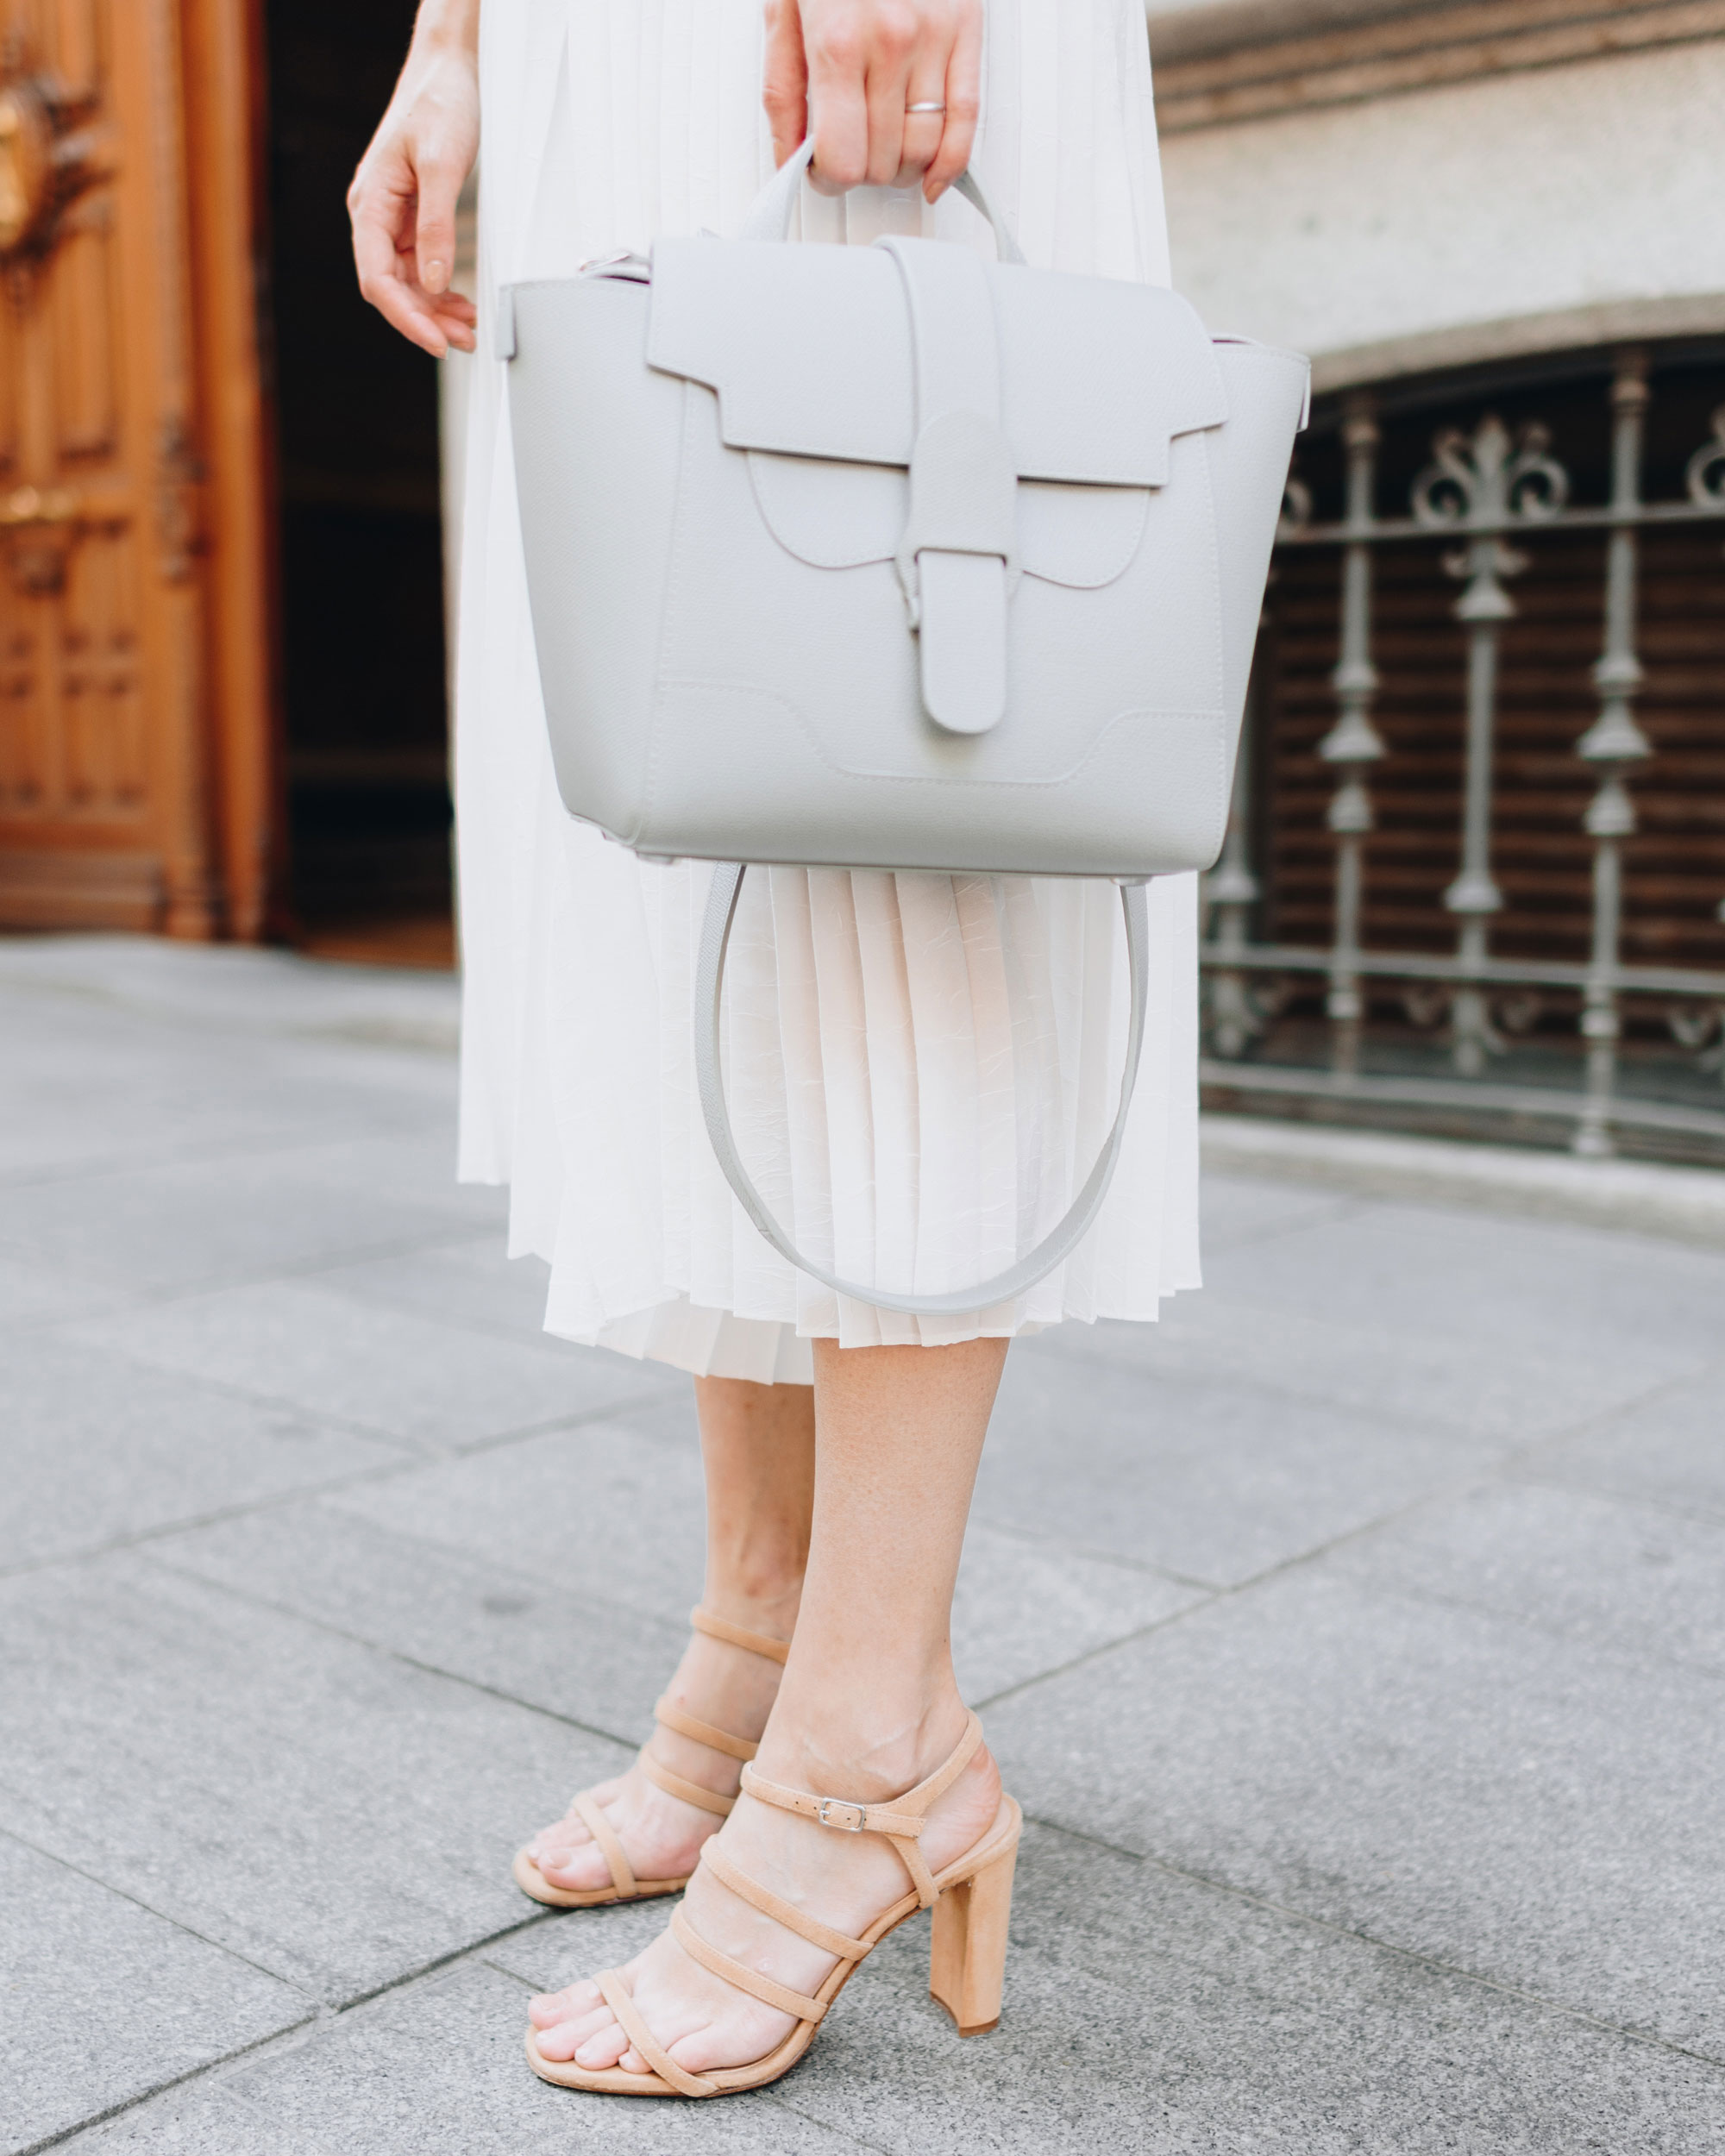 Senreve Maestra Bag Review - Elle Blogs